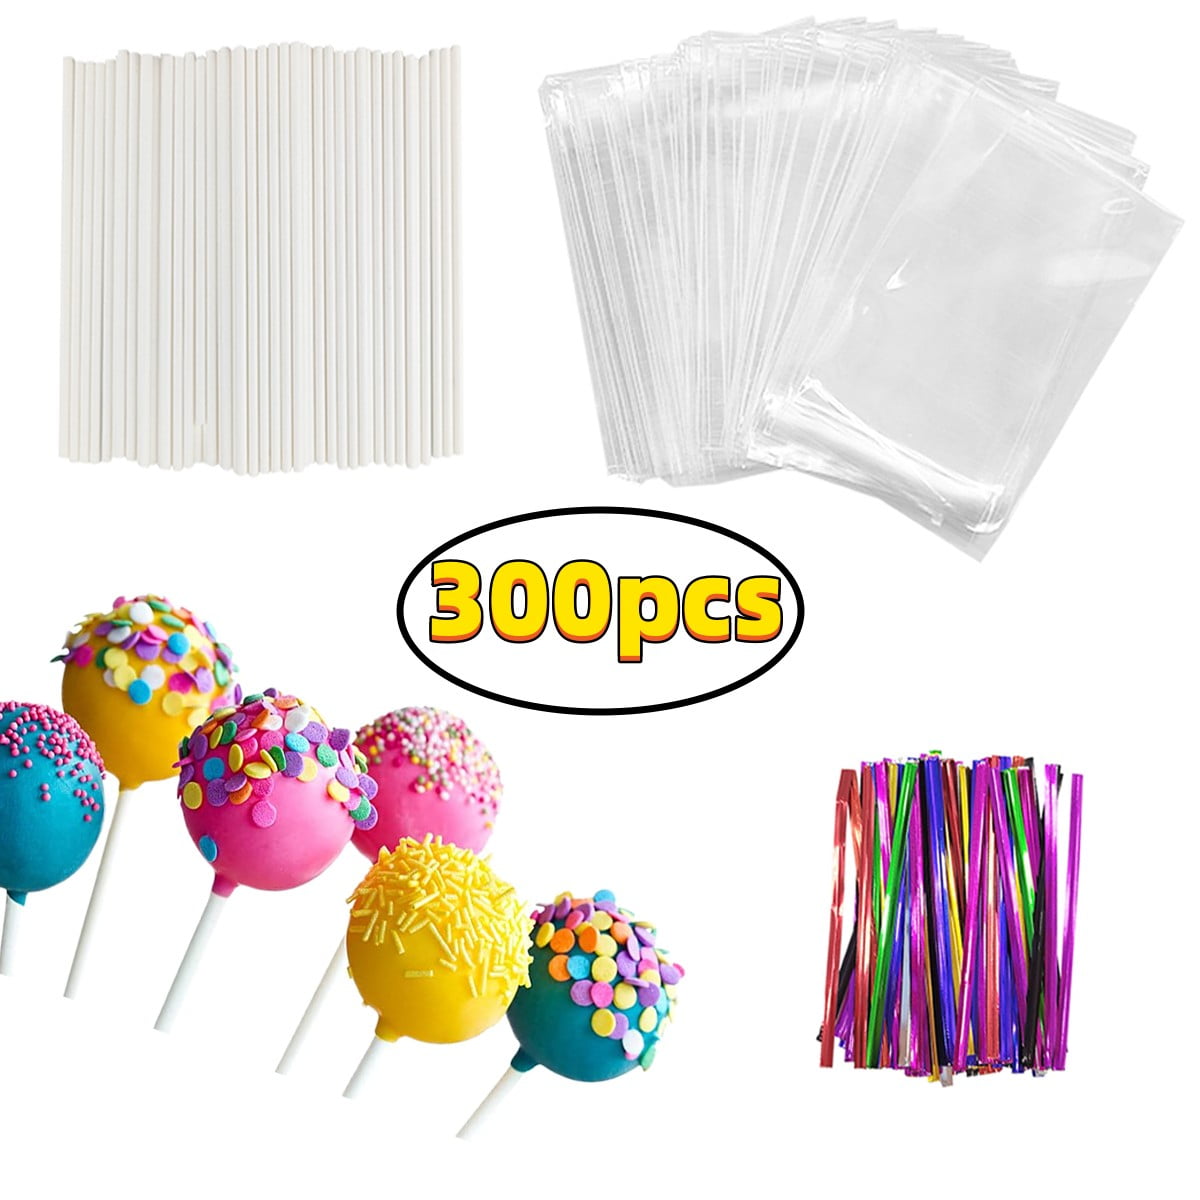 FUATOR 300 Pcs Cake Pop Sticks Set, 100pcs 6 inch Lollipop Sticks, 100pcs Cake Pop Bags, 100pcs Colorful Twist Ties, for DIY Lollipops, Cake Pops, Can